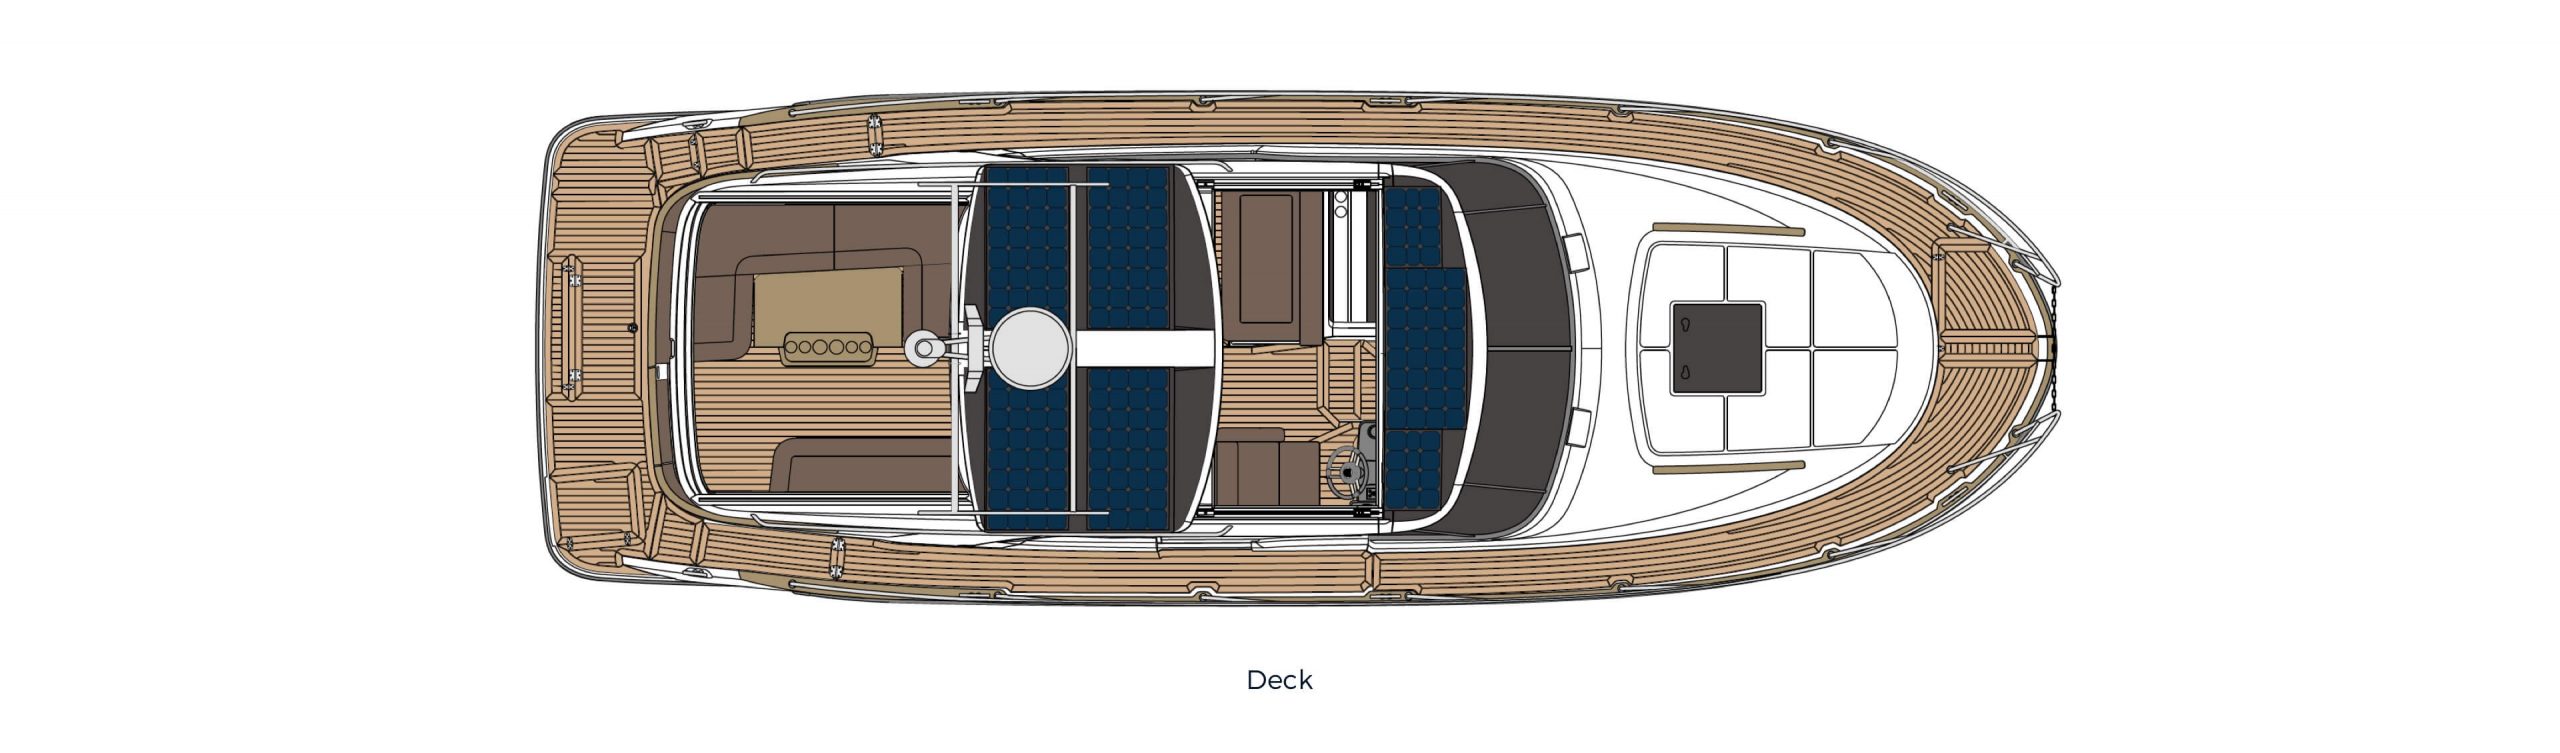 marex layout 330 deck scaled 1